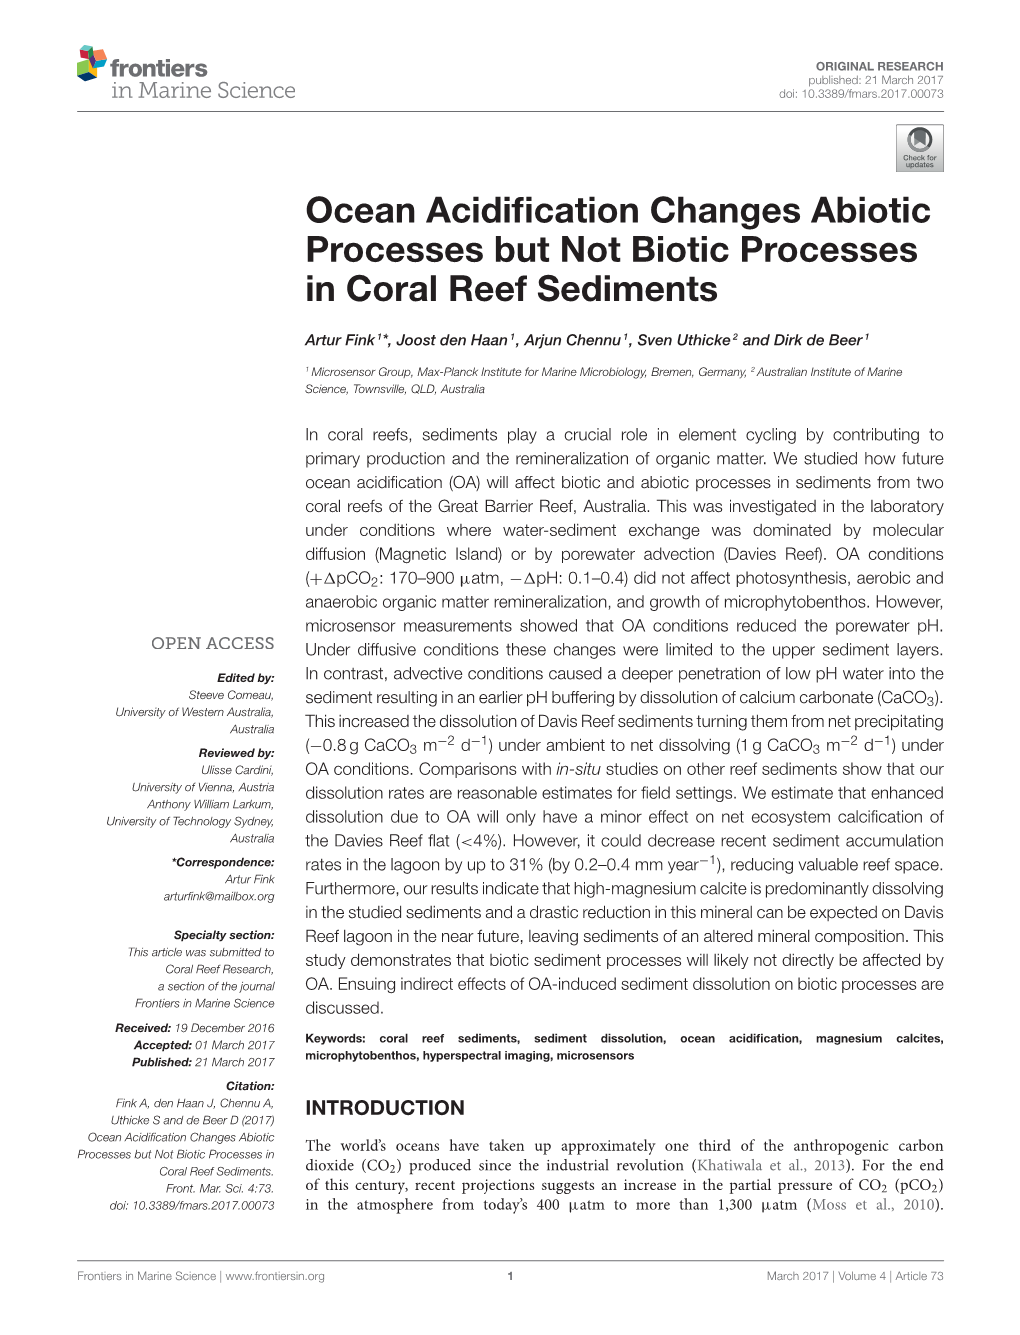 Ocean Acidification Changes Abiotic Processes but Not Biotic Processes